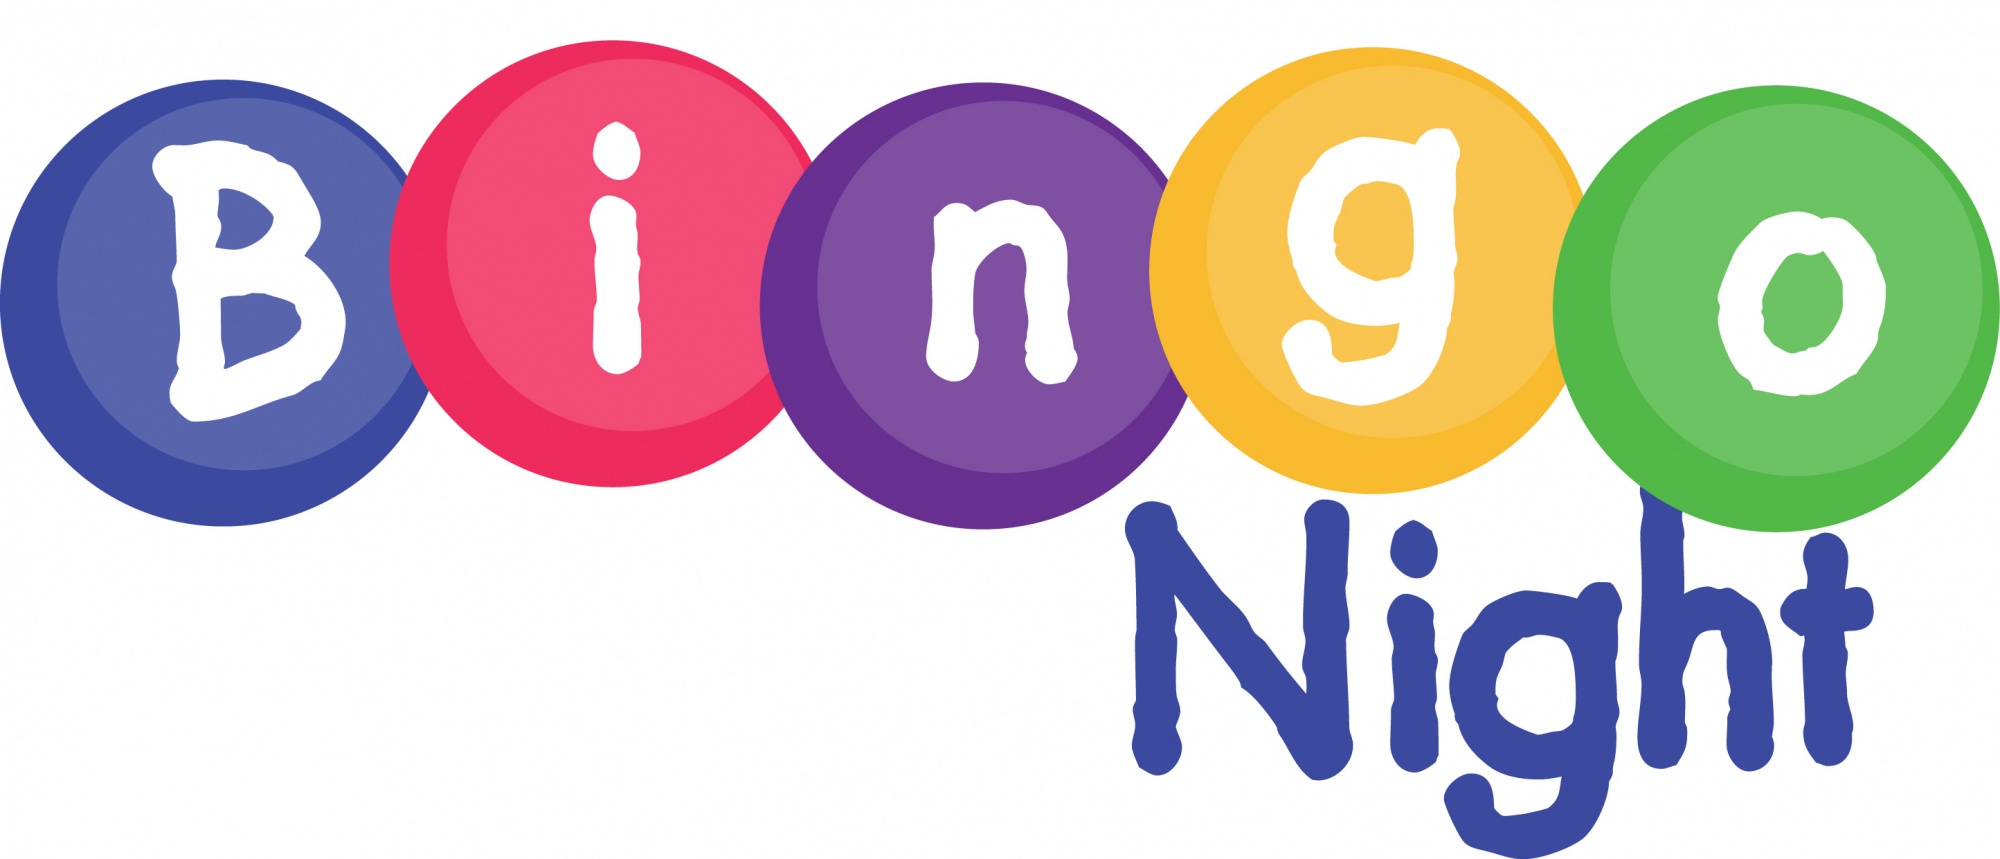 free-bingo-clip-art-download-free-bingo-clip-art-png-images-free